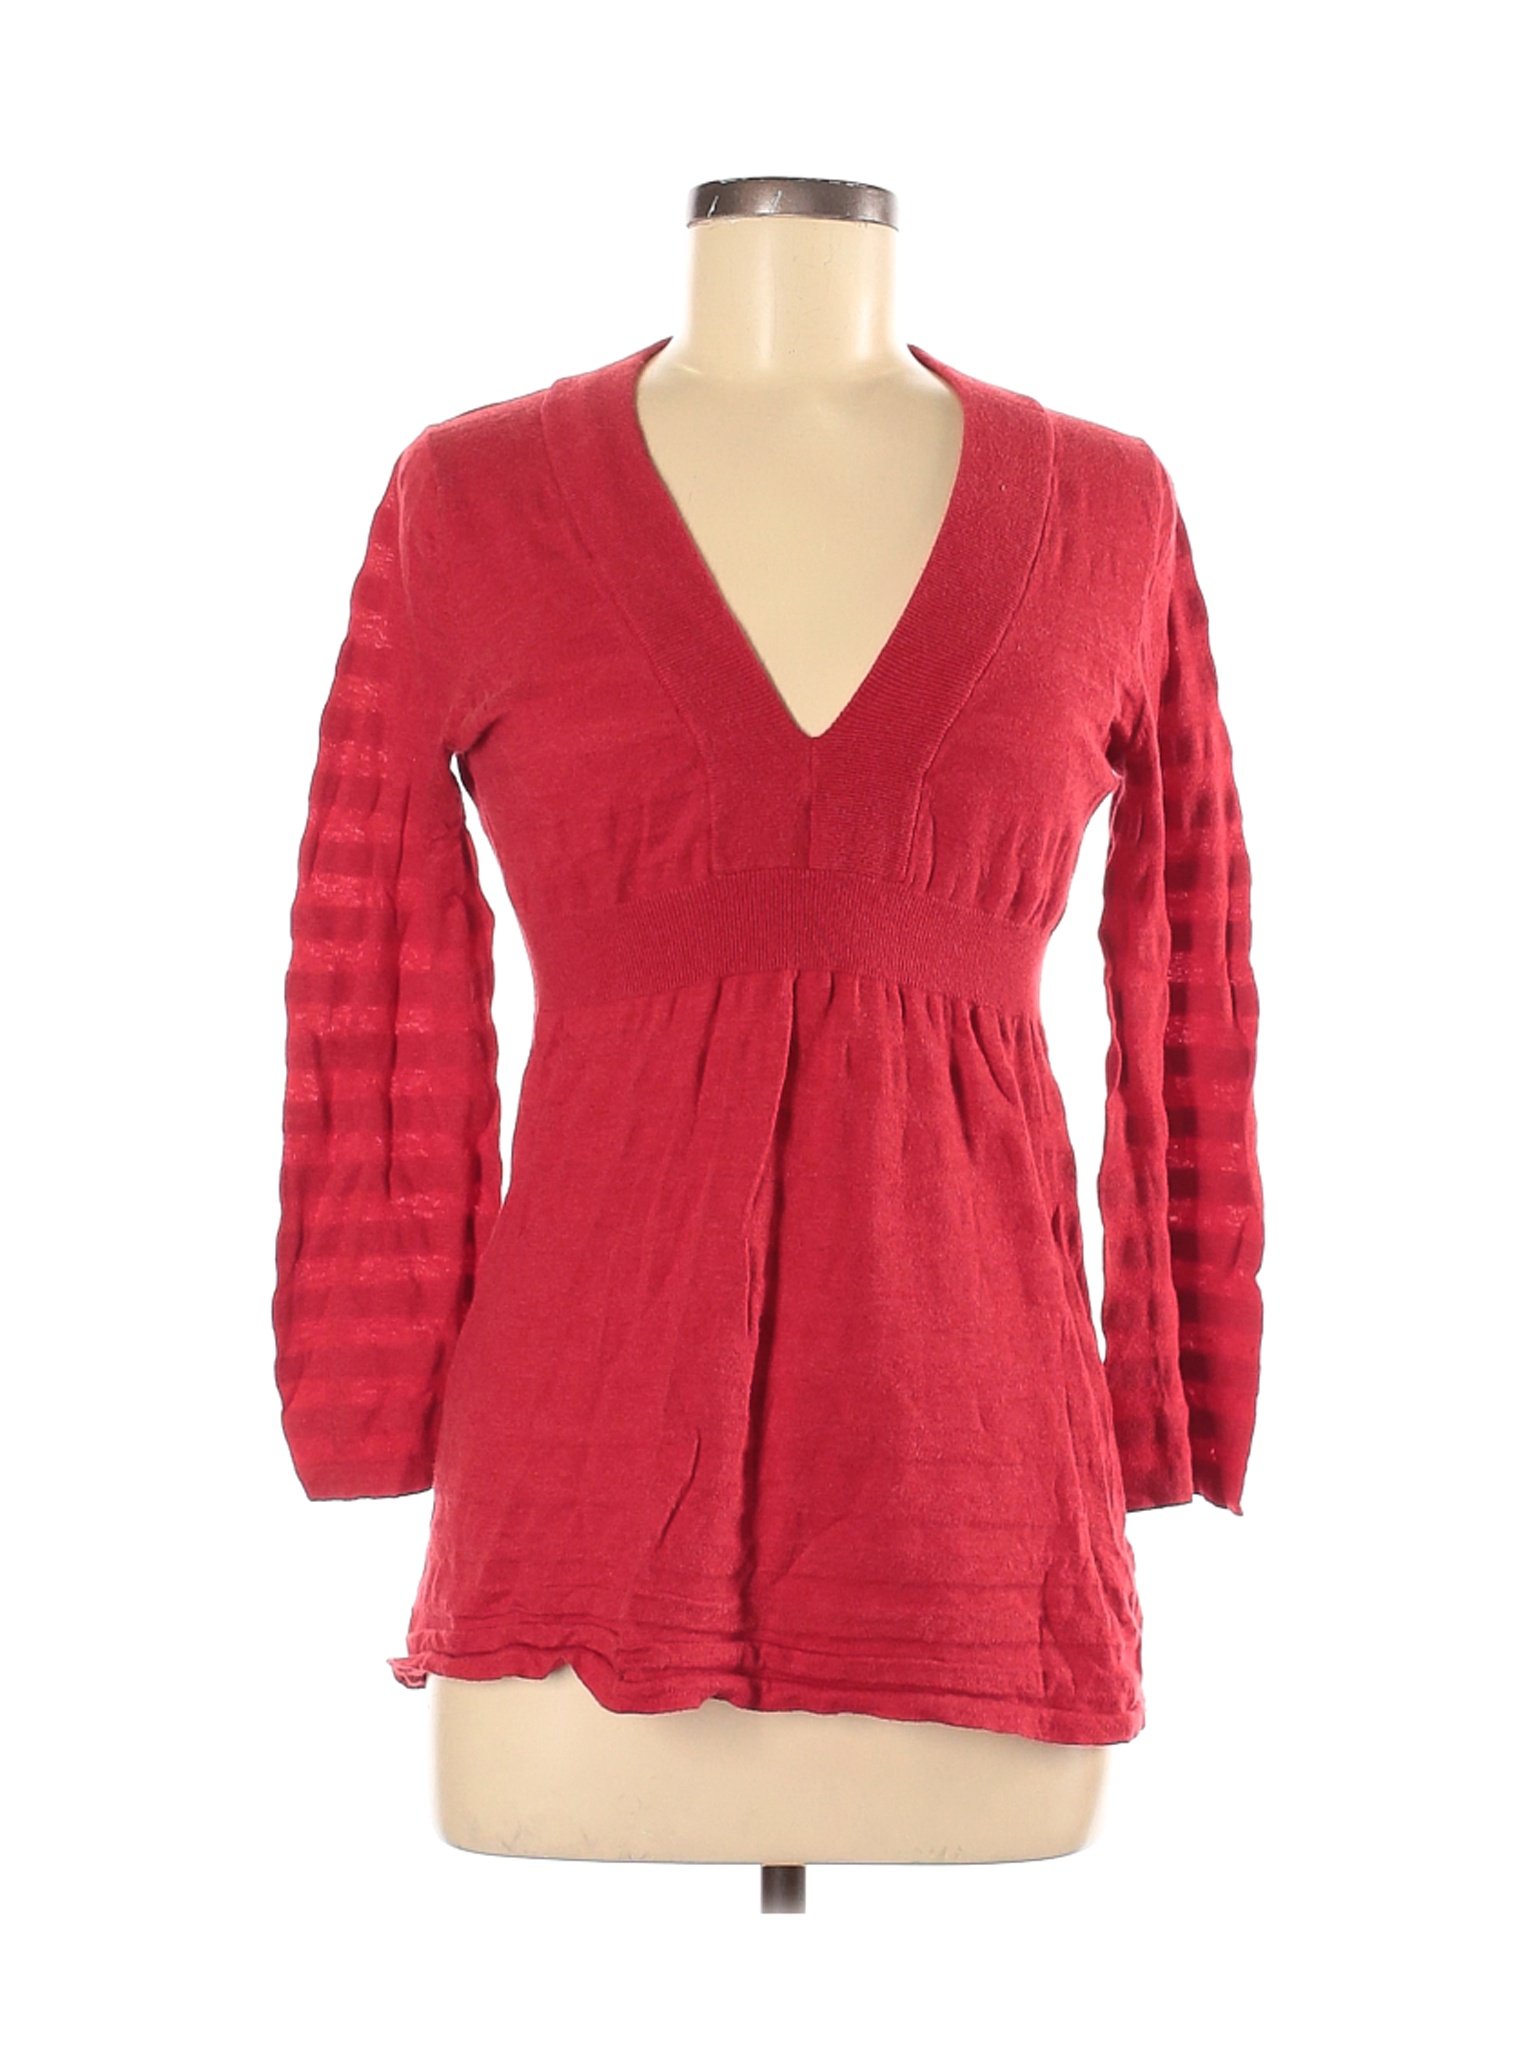 Banana Republic Women Red Pullover Sweater M | eBay